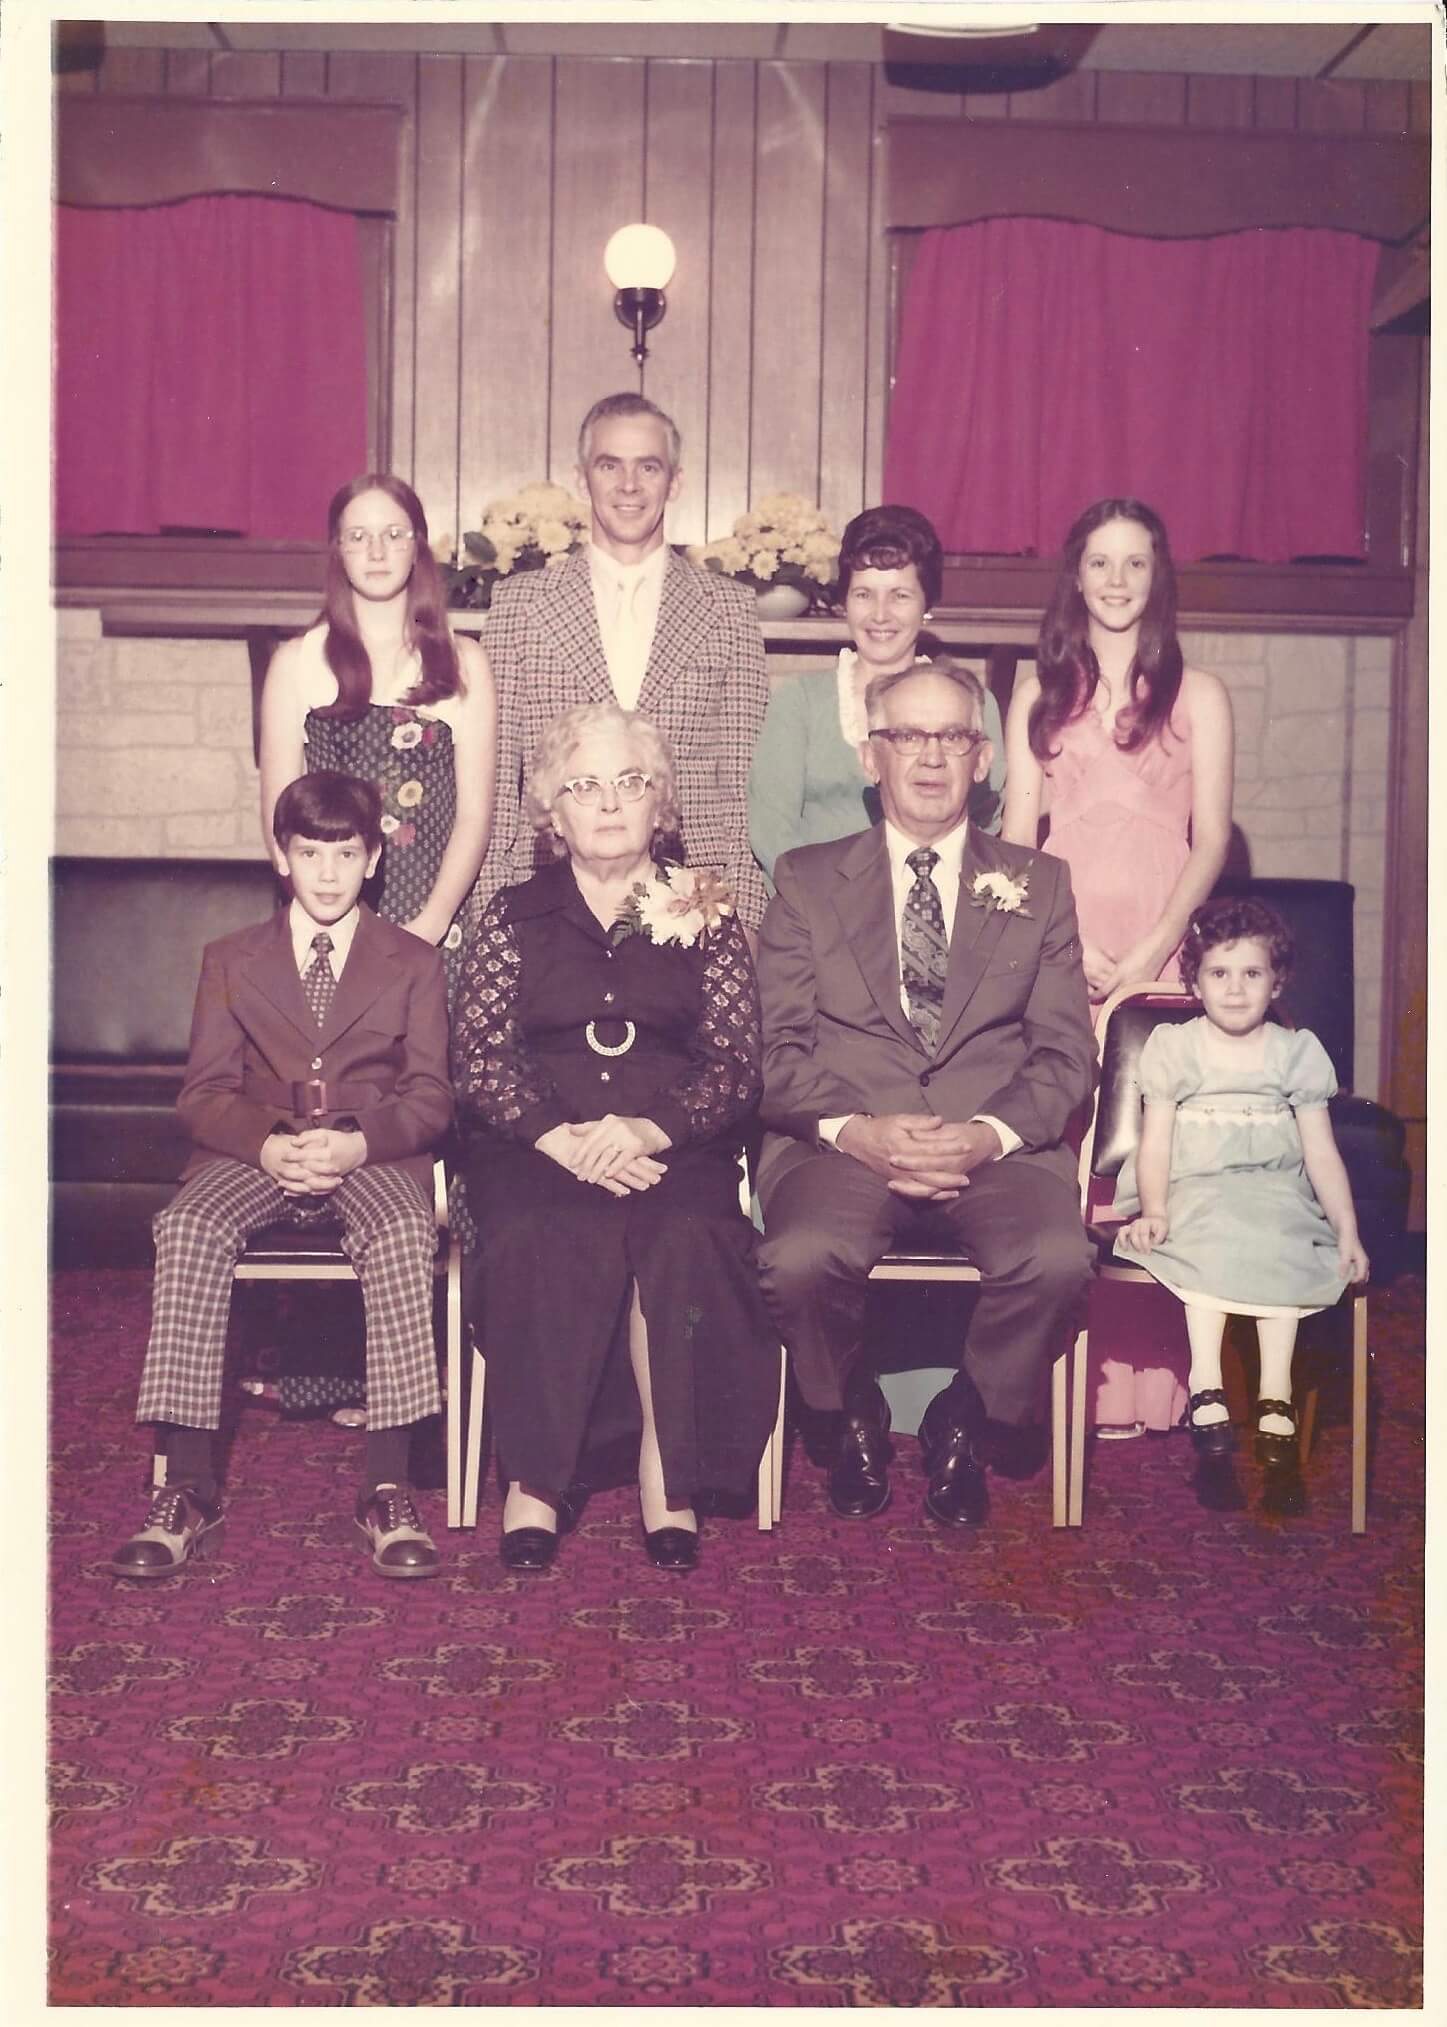 a 1974 American family portrait